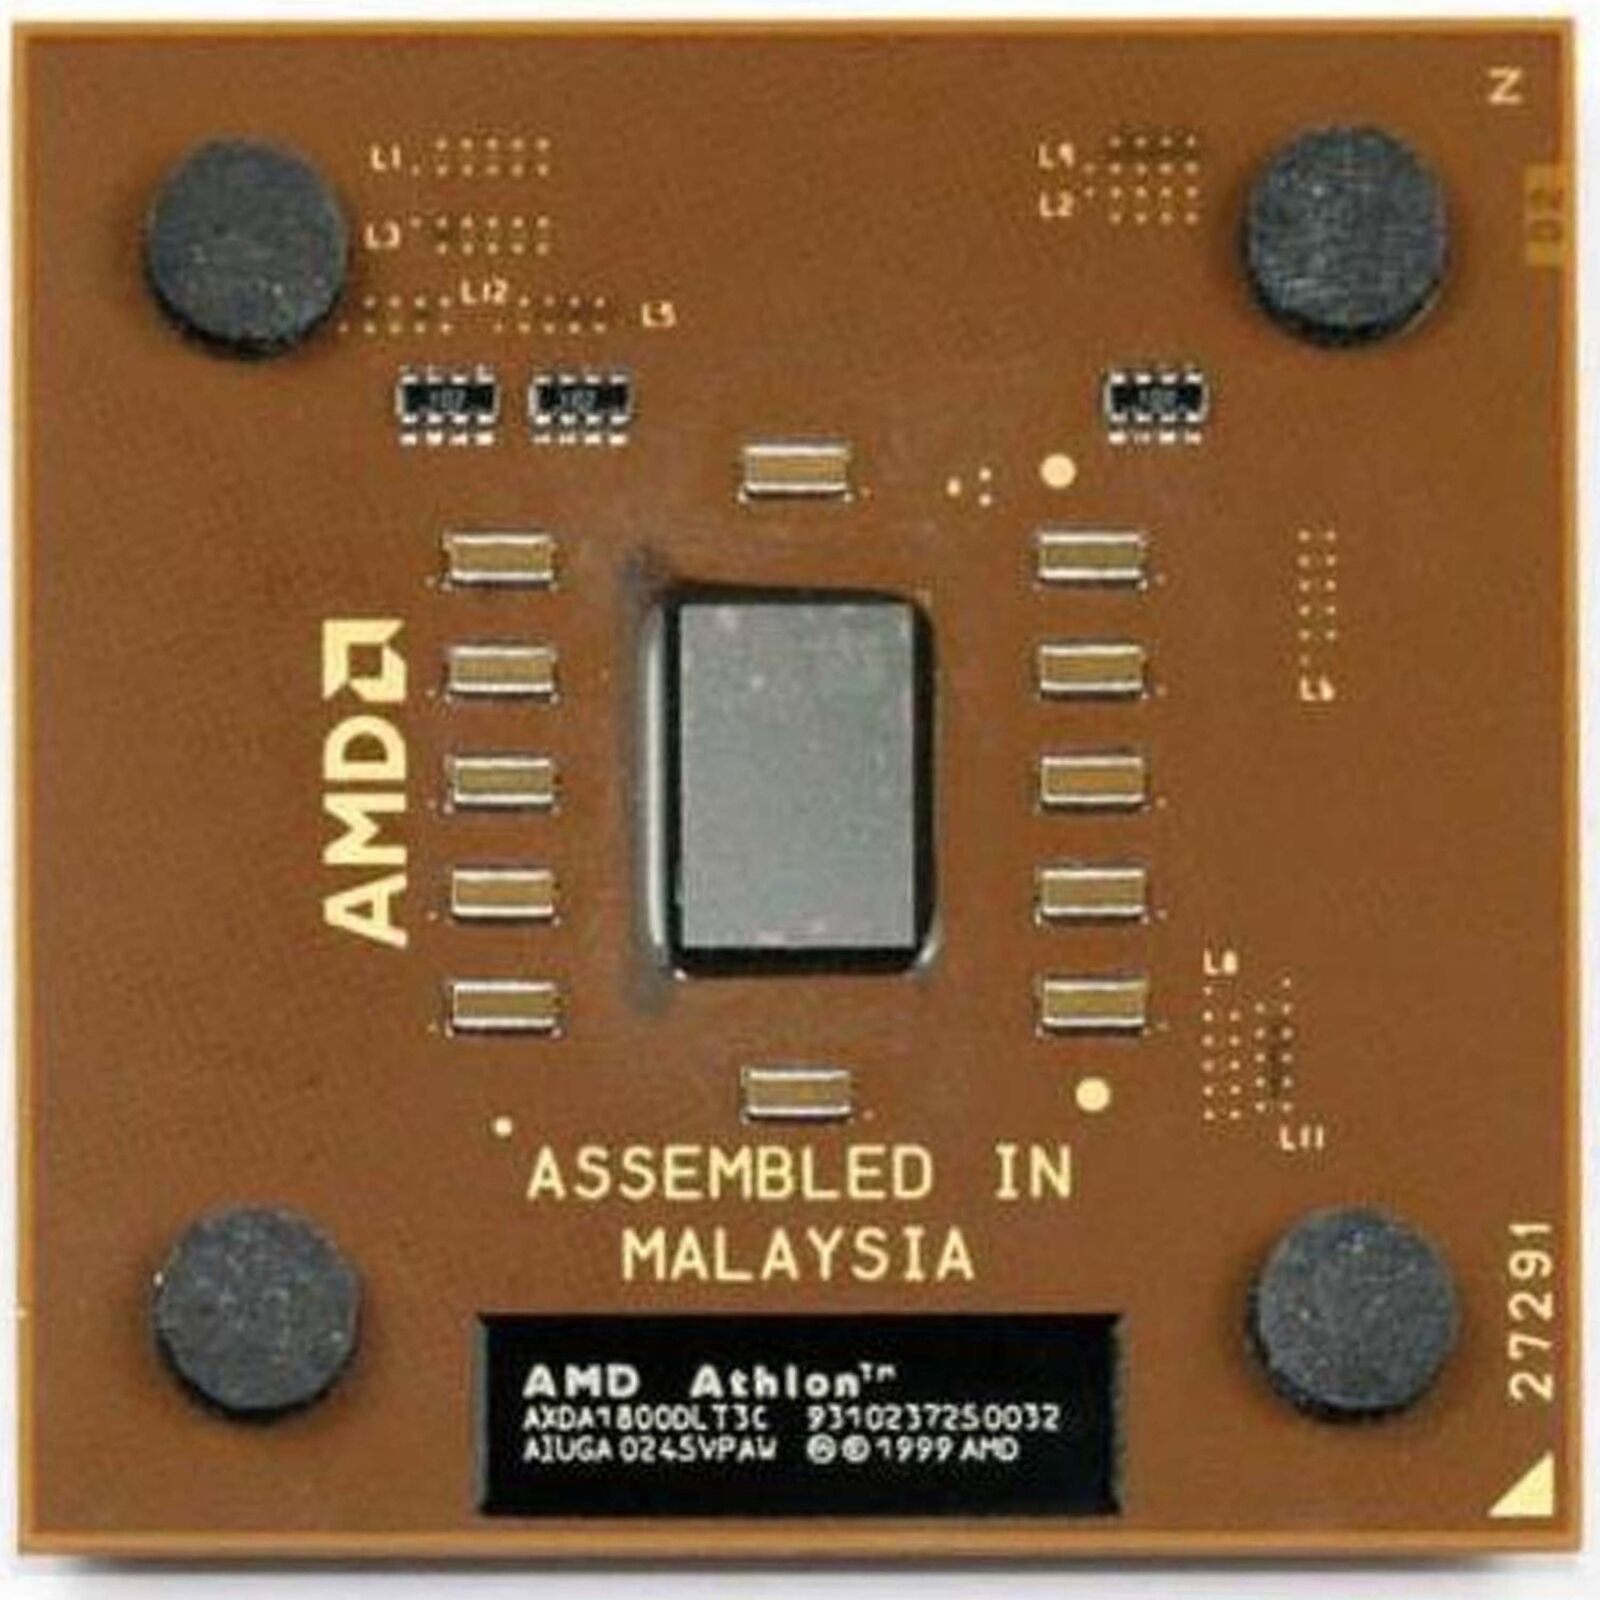 AMD Athlon XP 1800+ AXDA1800DUT3C Processor Vintage Containing Collection Socket